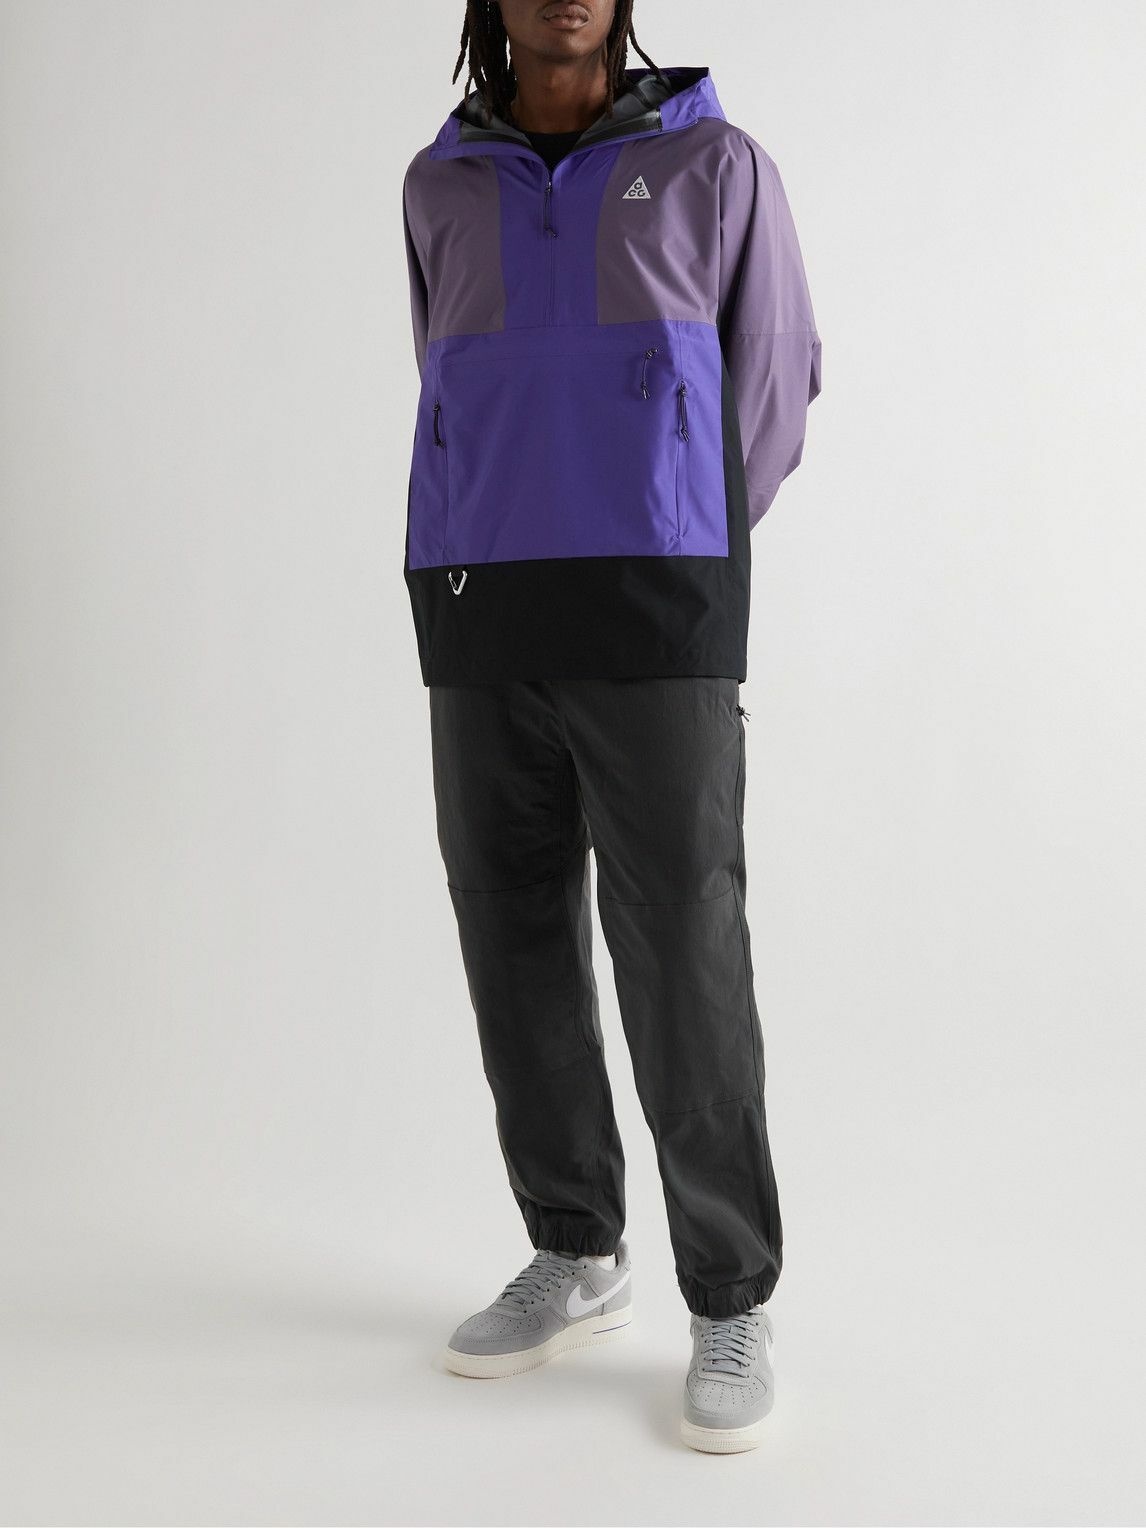 Besparing zwak Overblijvend Nike - ACG Cascade Rains Storm-FIT ADV Hooded Half-Zip Jacket - Purple Nike